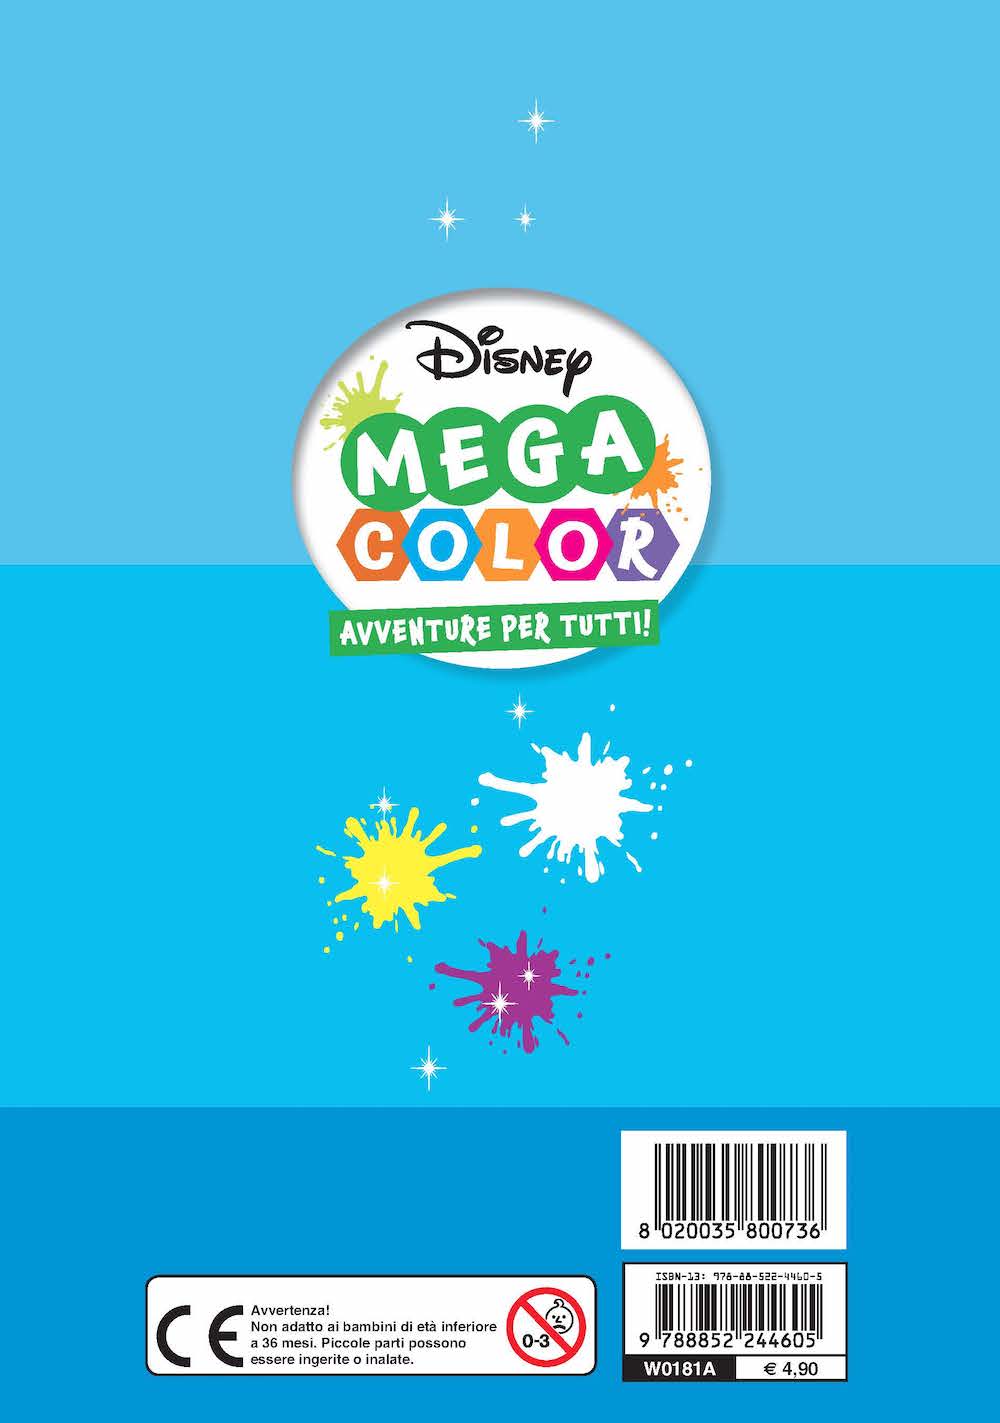 Disney Mega Color - Avventure per tutti